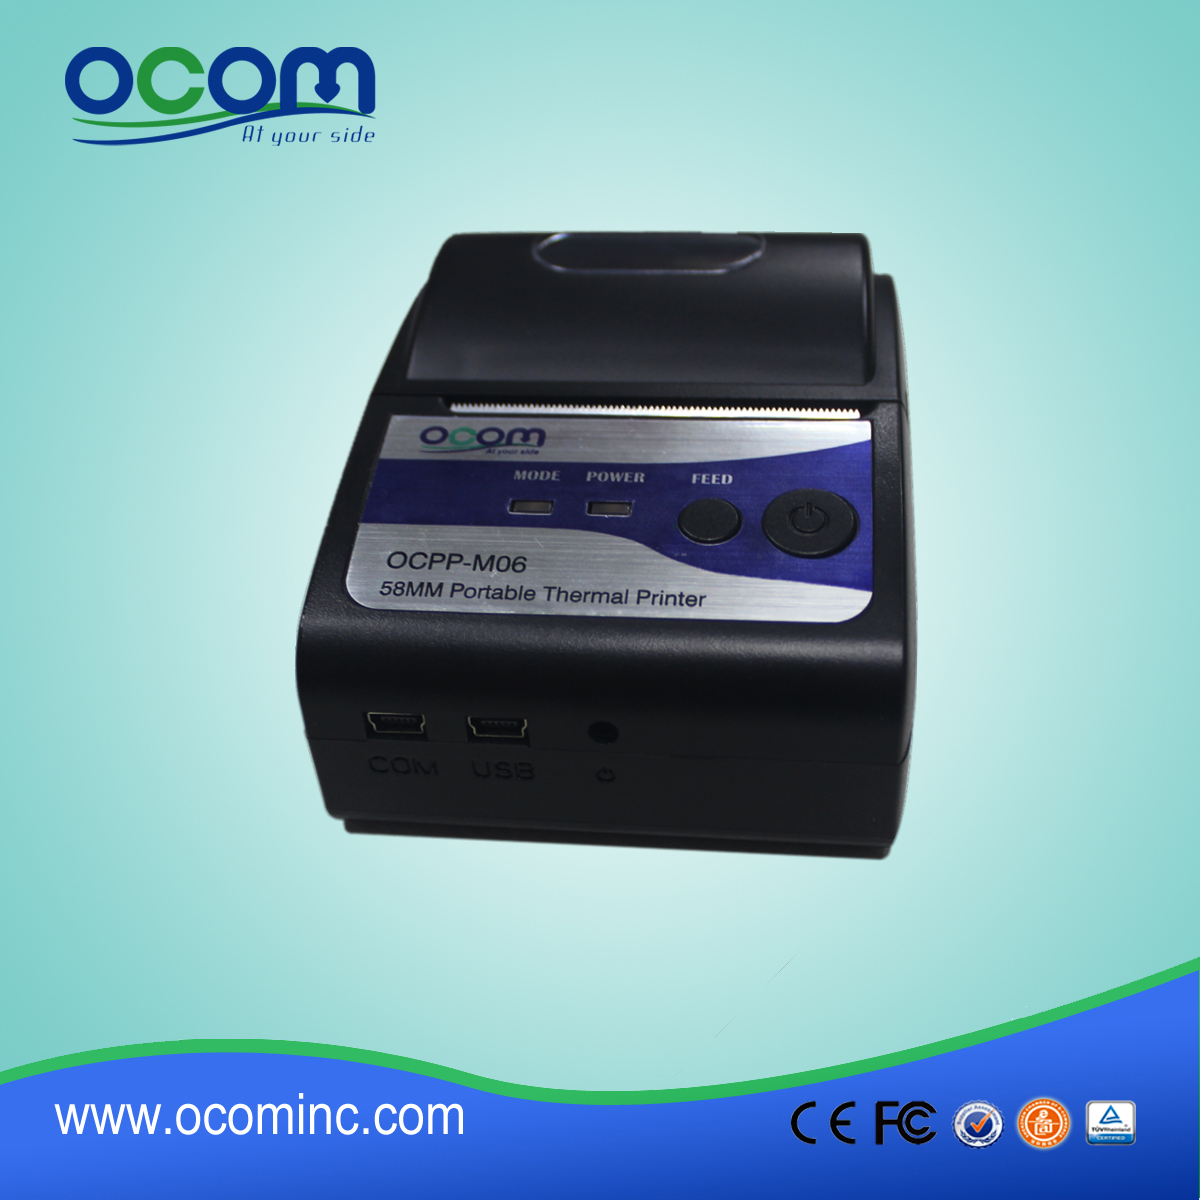 OCPP-M0658毫米迷你便携式蓝牙Android的热敏票据打印机